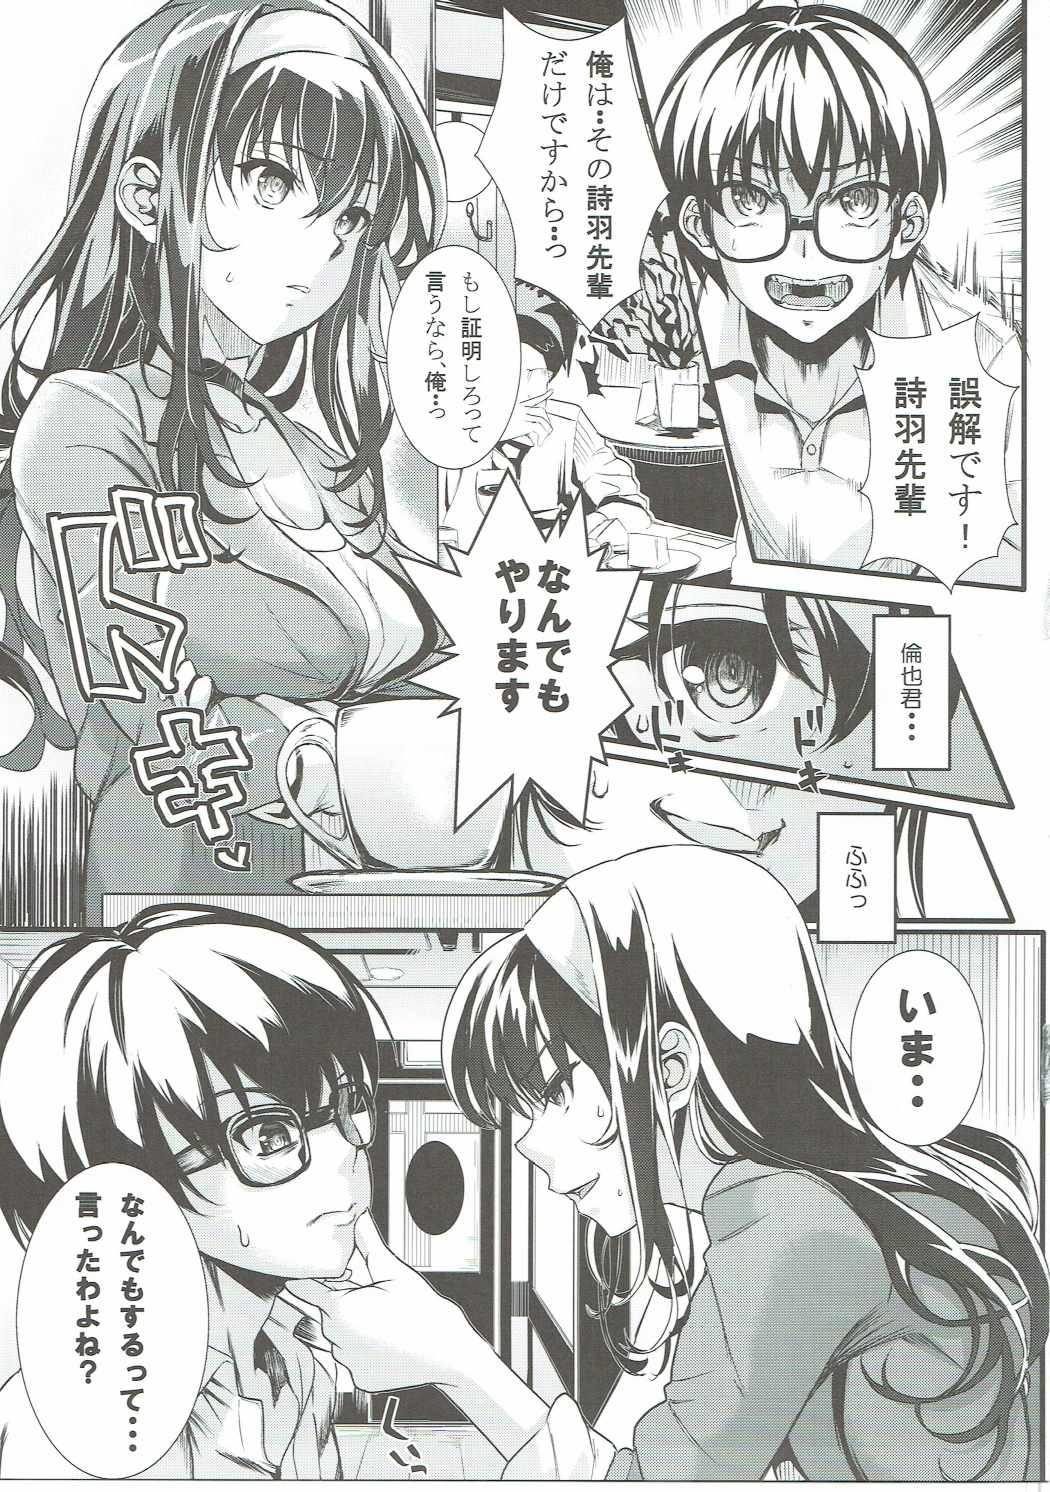 Ejaculation Saenai Futari no Itashikata 4 - Saenai heroine no sodatekata Foot Job - Page 4